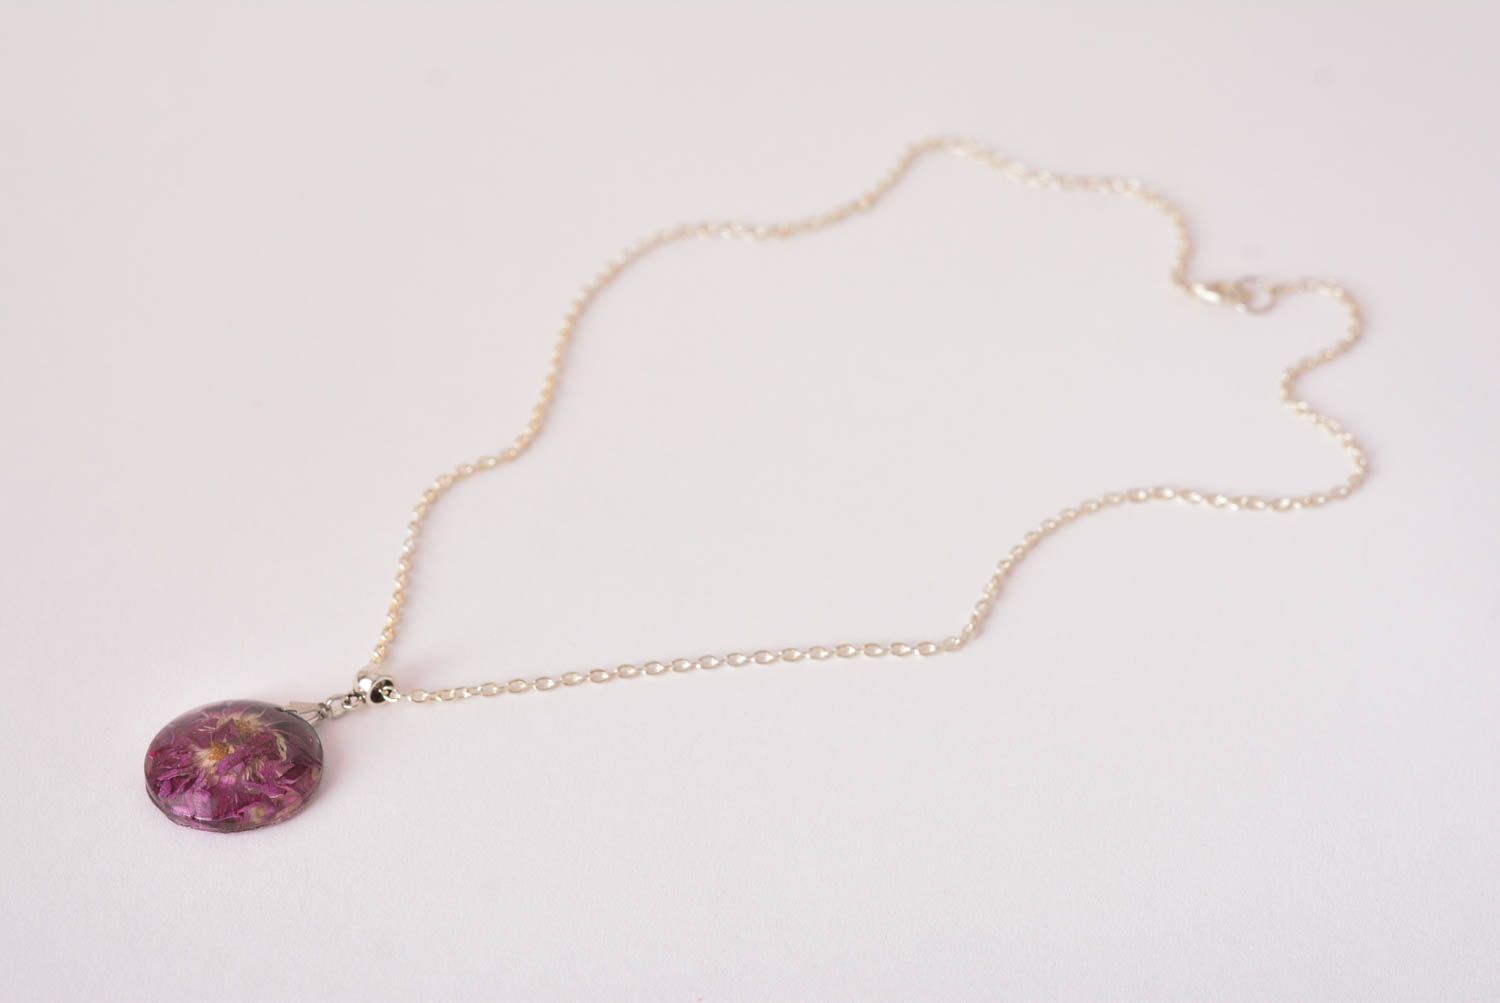 Handmade pendant unusual pendant for women gift ideas designer jewelry photo 2